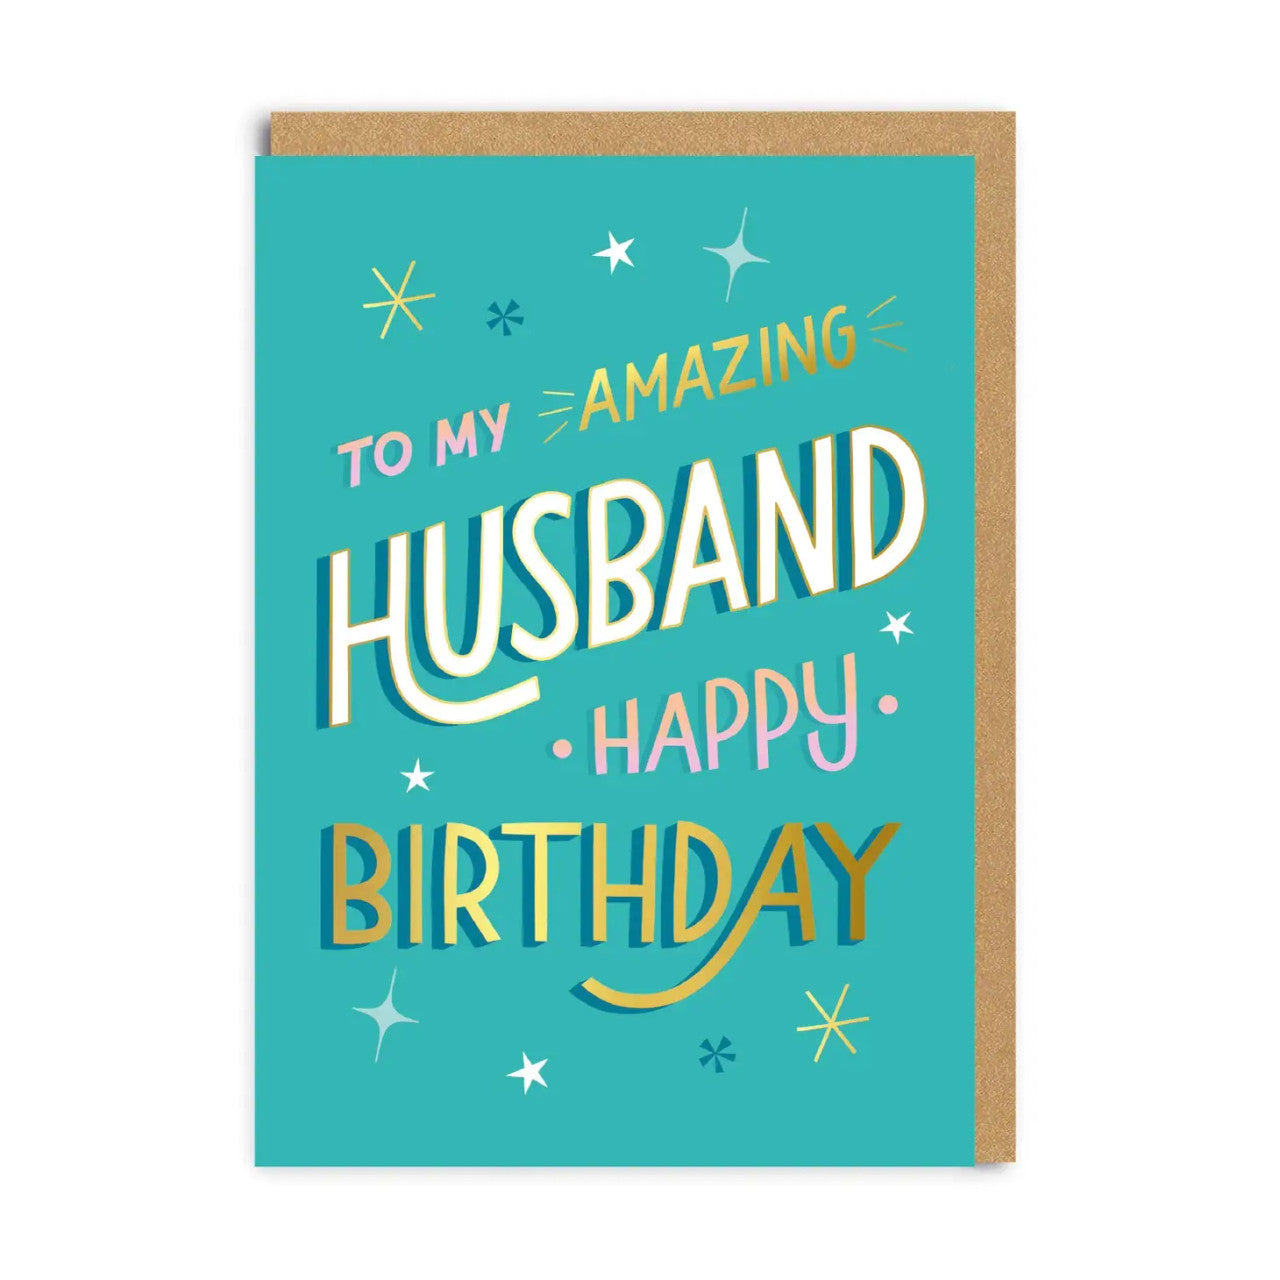 Birthday Card text reads "To My Amazing Husband Happy Birthday"